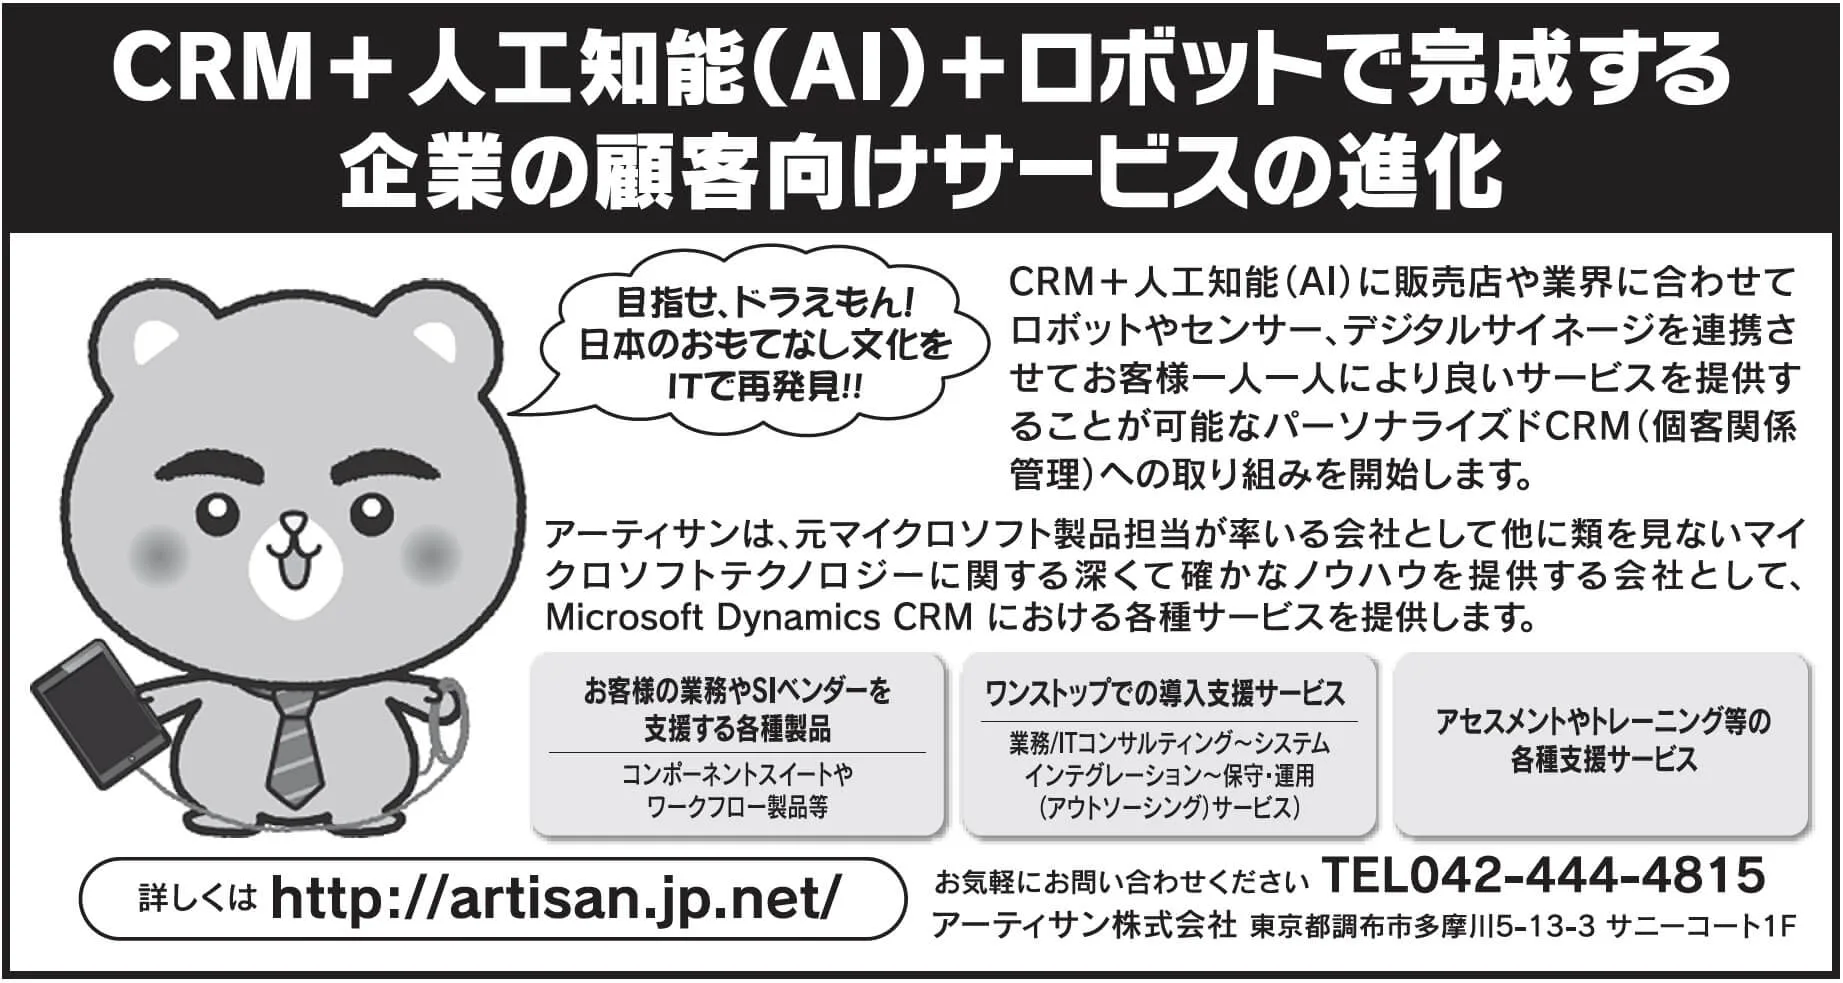 CRM+人口知能(AI)+ロボットで完成する企業の顧客向けサービスの進化　目指せ、ドラえもん！日本のおもてなし文化をITで再発見!!